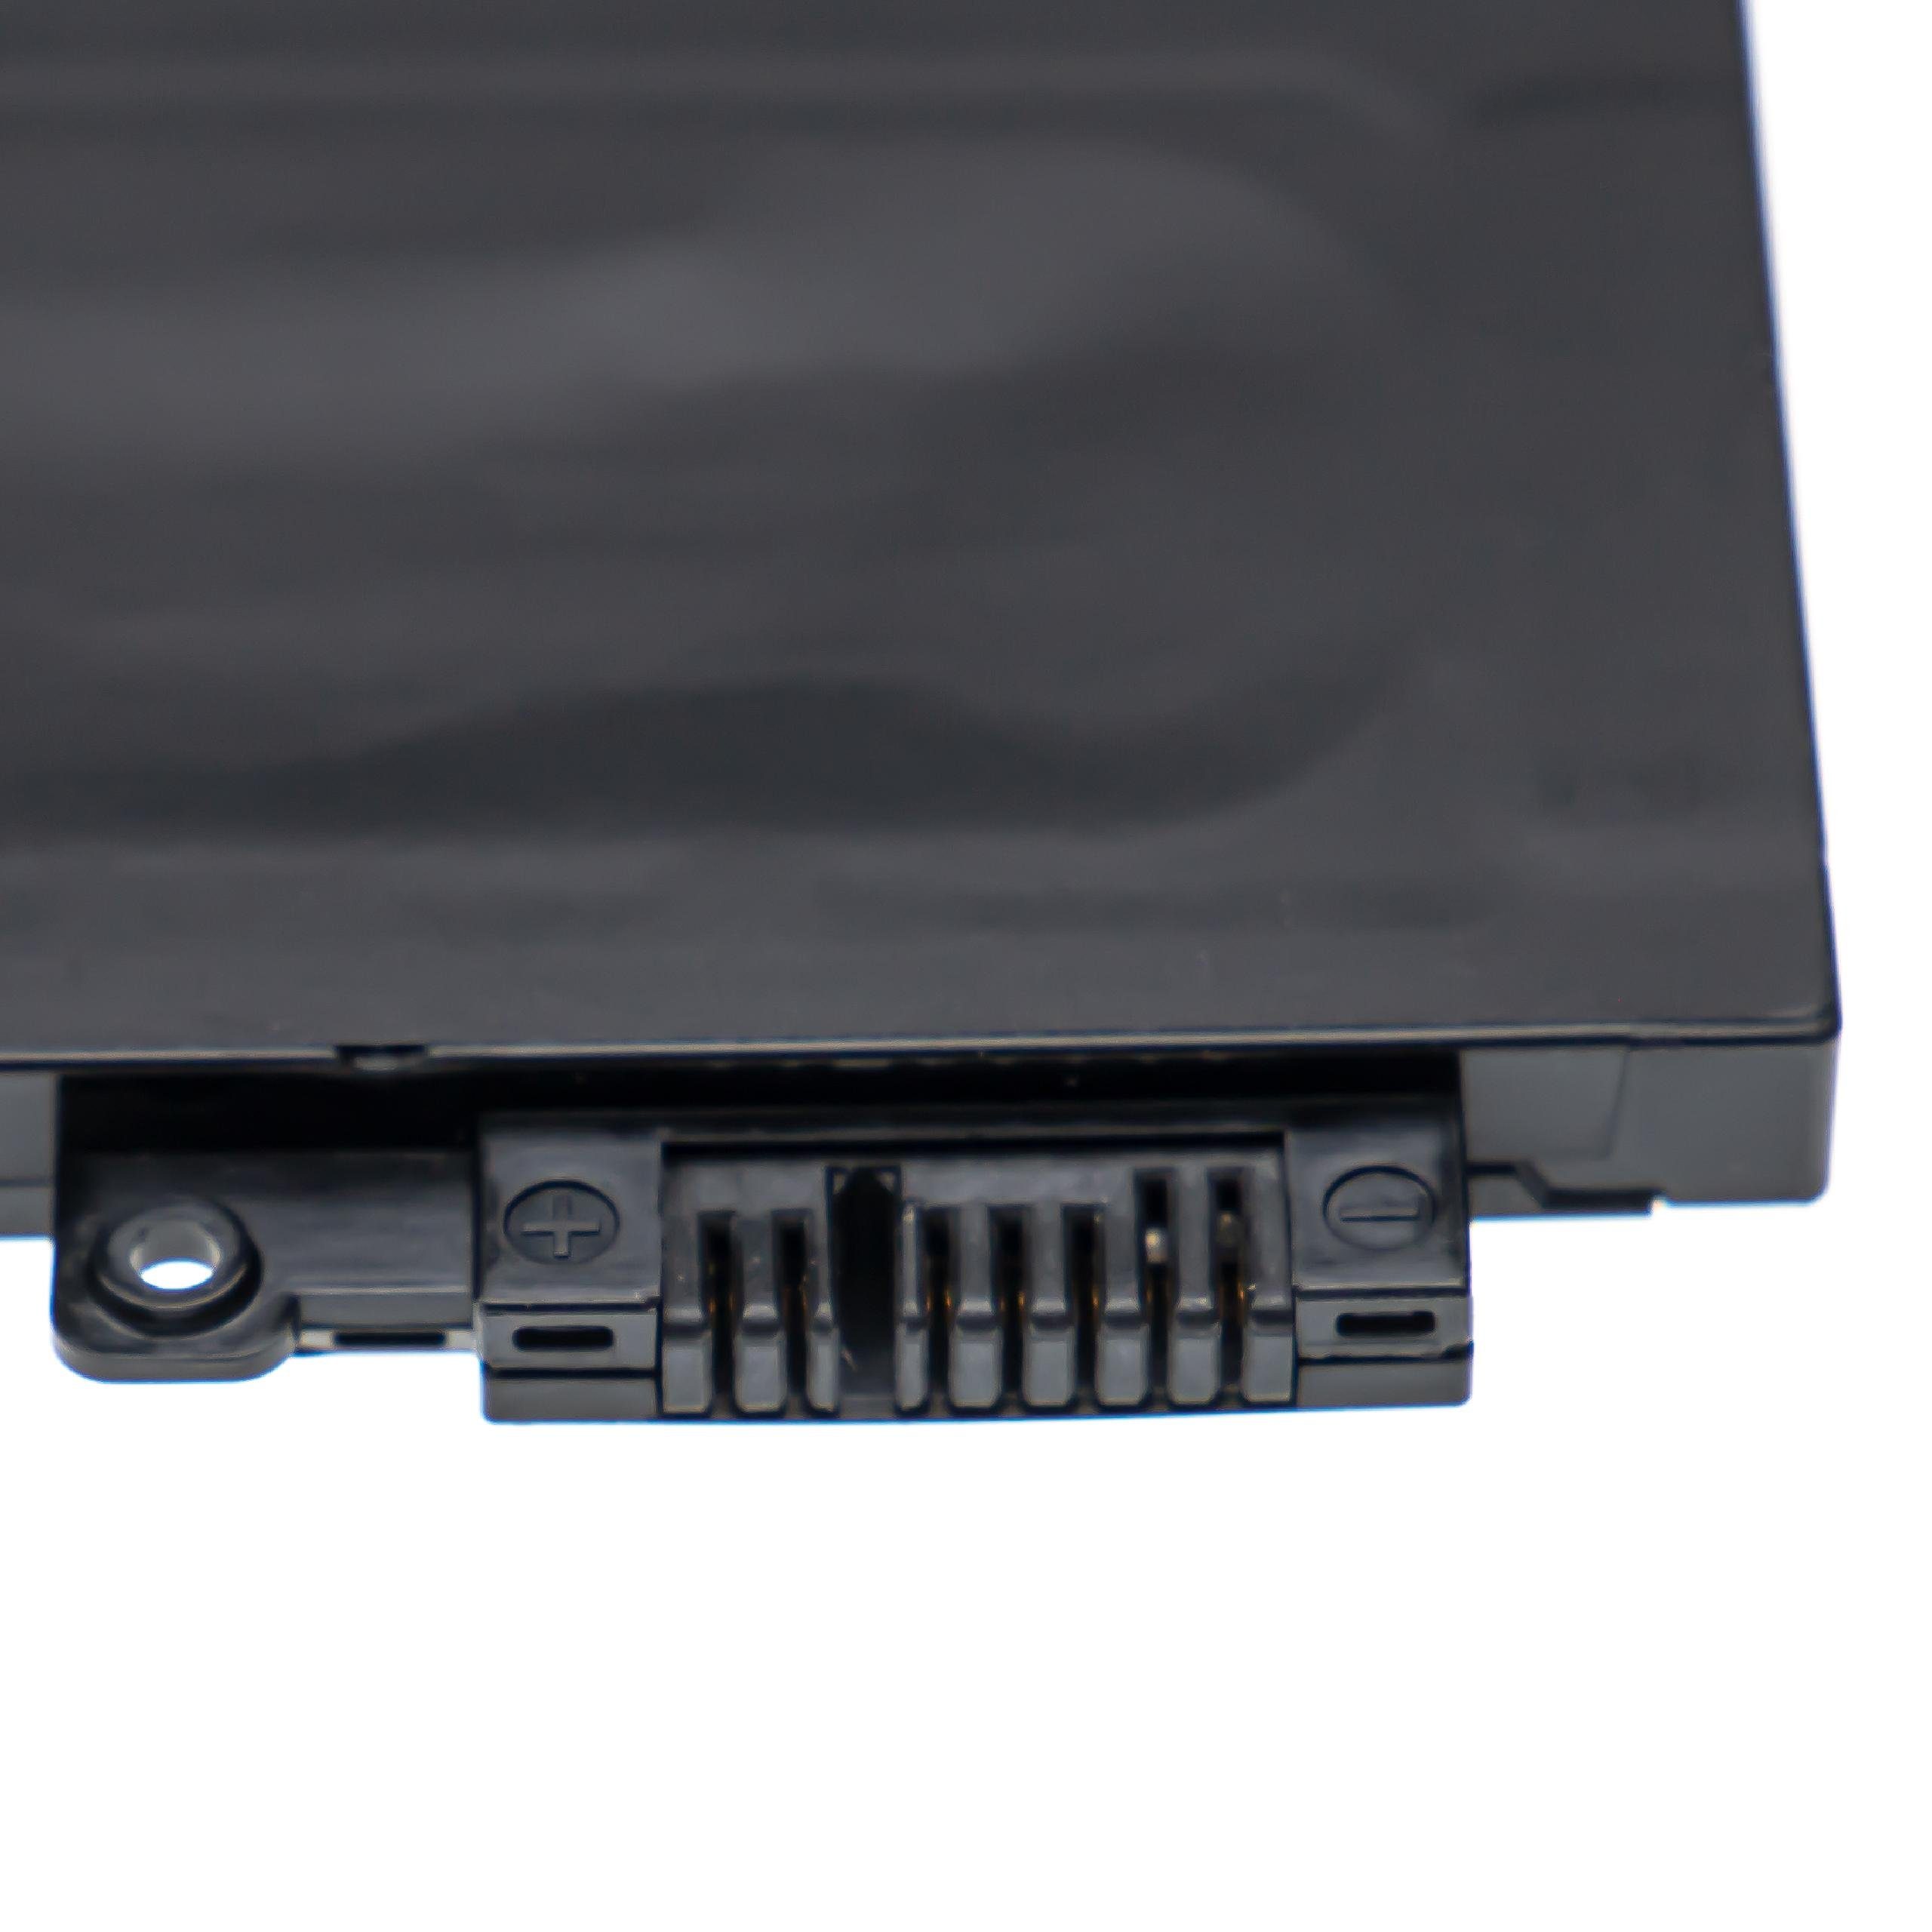 Lenovo passend ThinkPad mAh 20HF001Q, T470s Laptop-Akku für vhbw T470s T470s 2000 20HF001DUS,